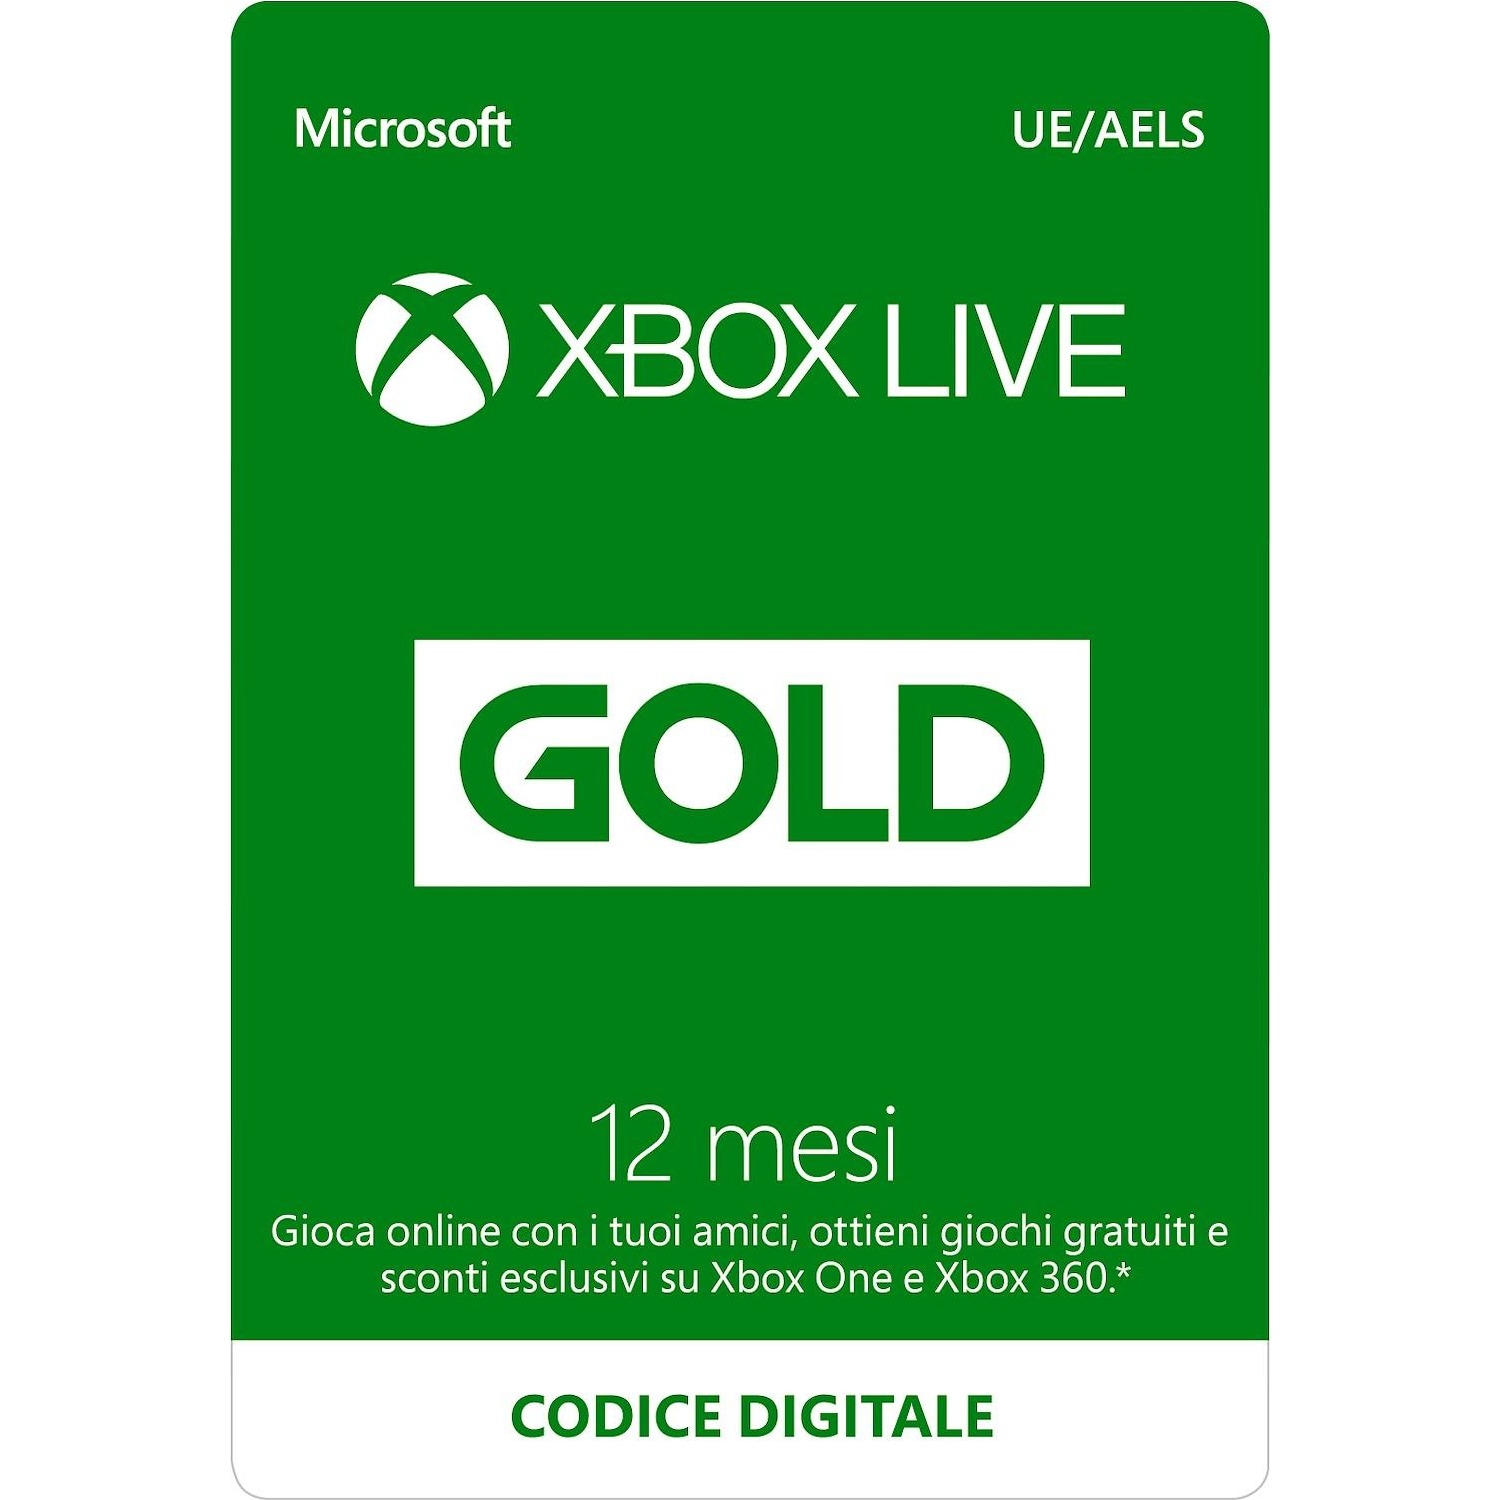 Immagine per Microsoft Xbox Live Gold 12 mesi CARD da DIMOStore